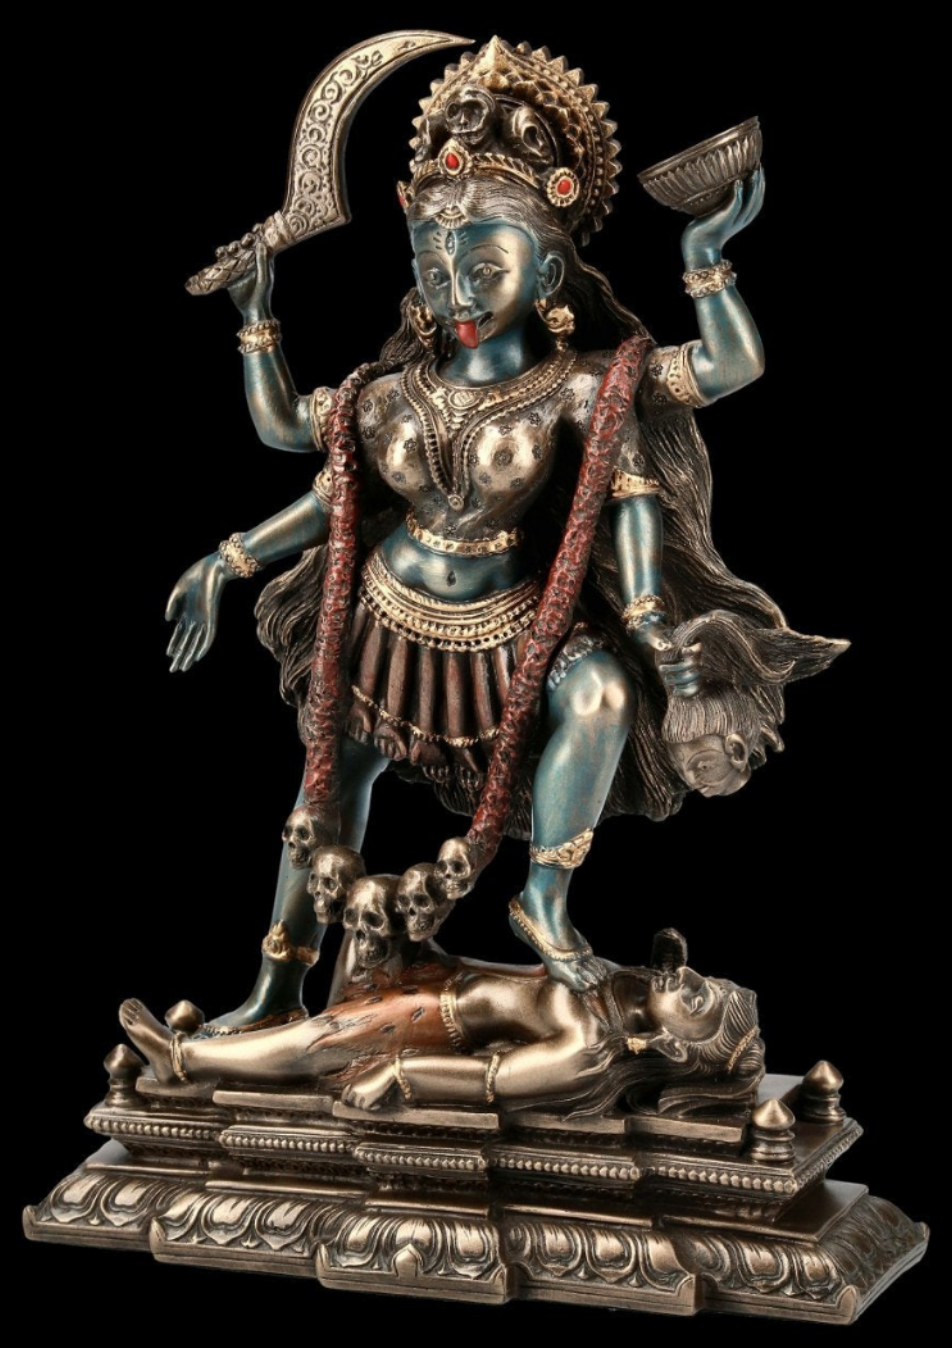 Kali Ma Goddess Statue (Death, Doomsday, Sexuality, Time, Violence)